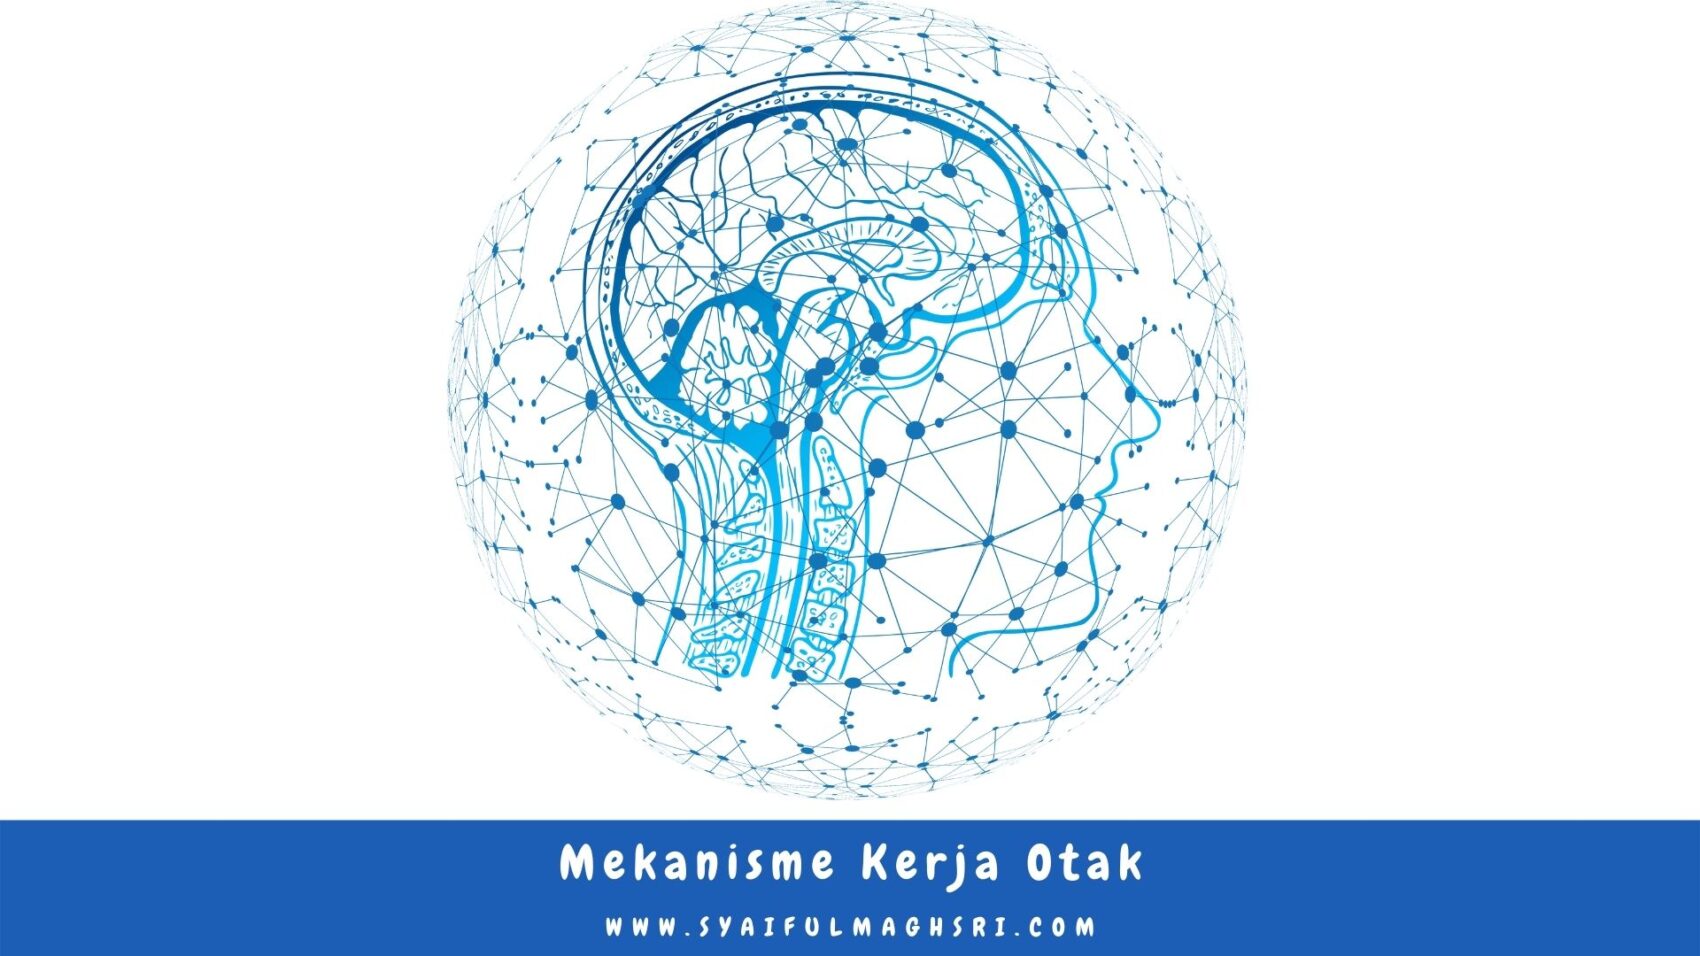 Mekanisme Kerja Otak - Syaiful Maghsri.com